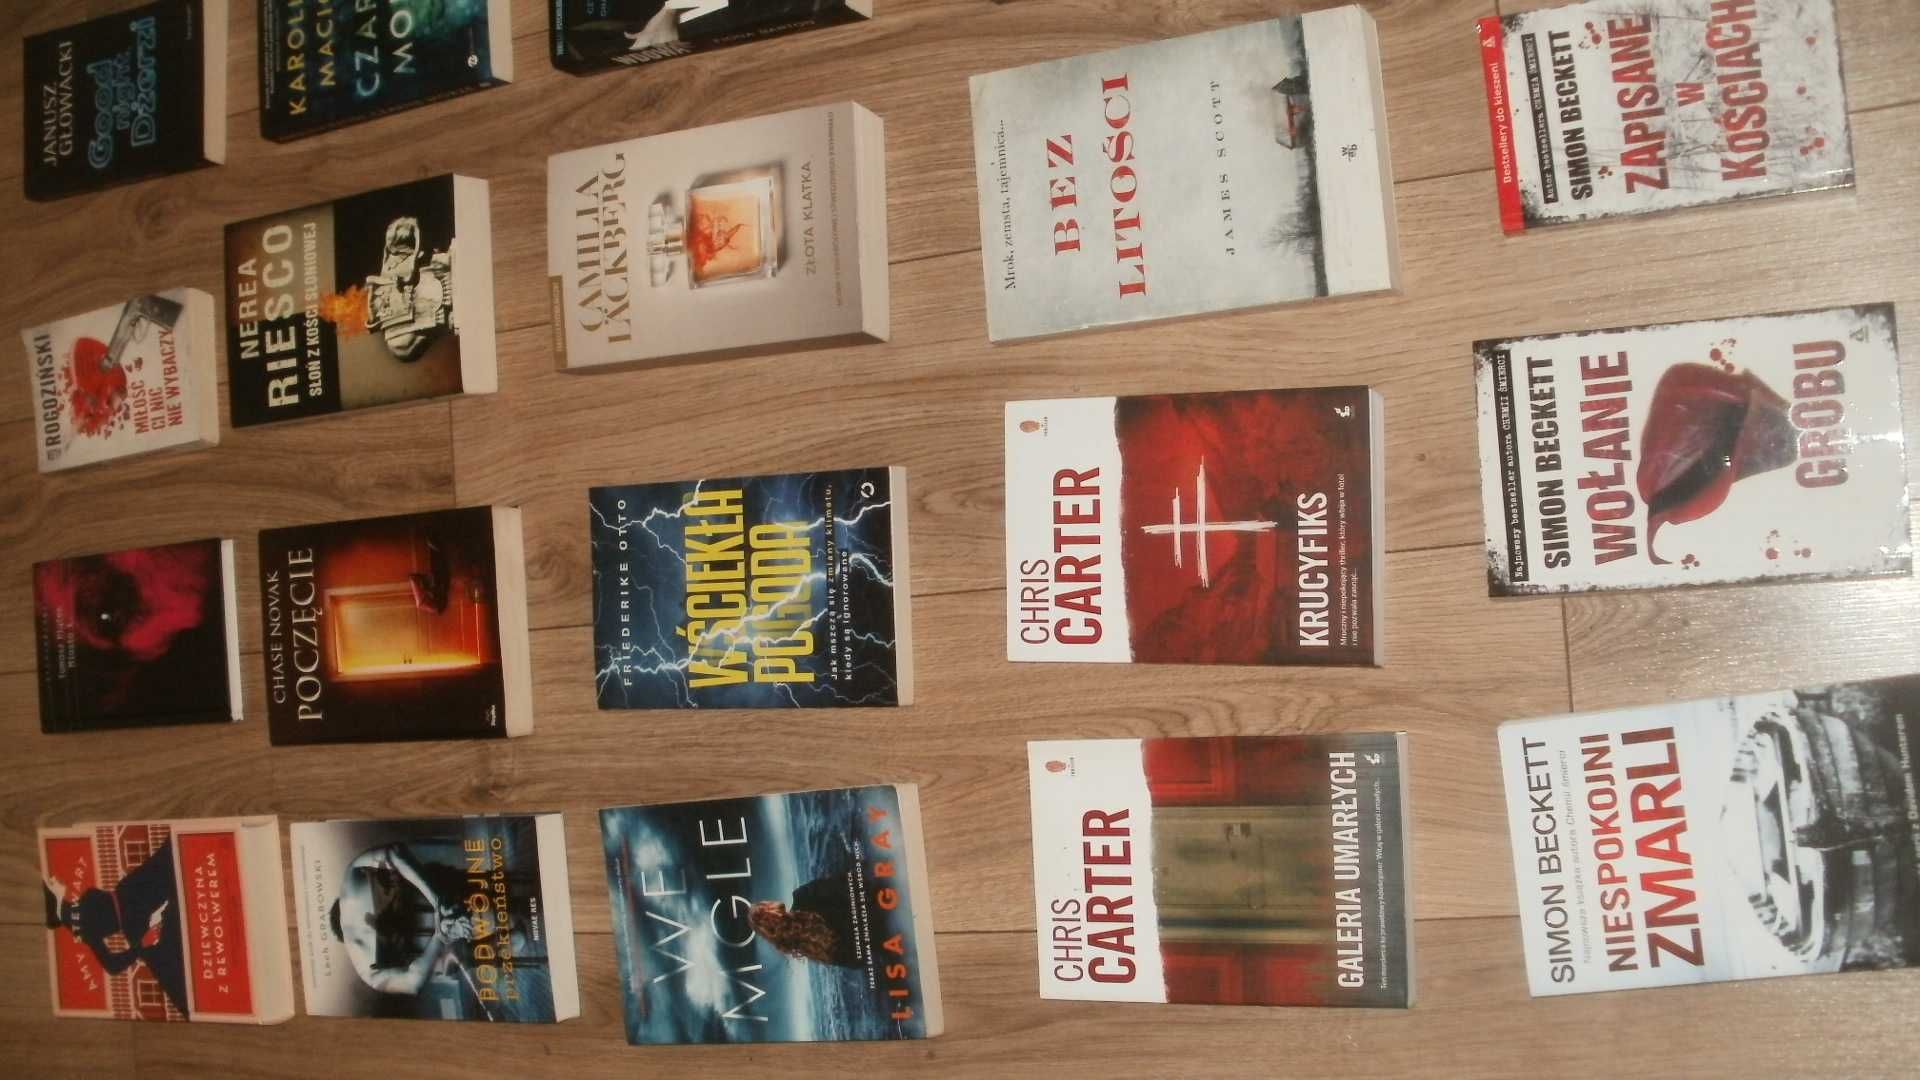 Carter, Mróz, Beckett i inni -zestaw różnych książek